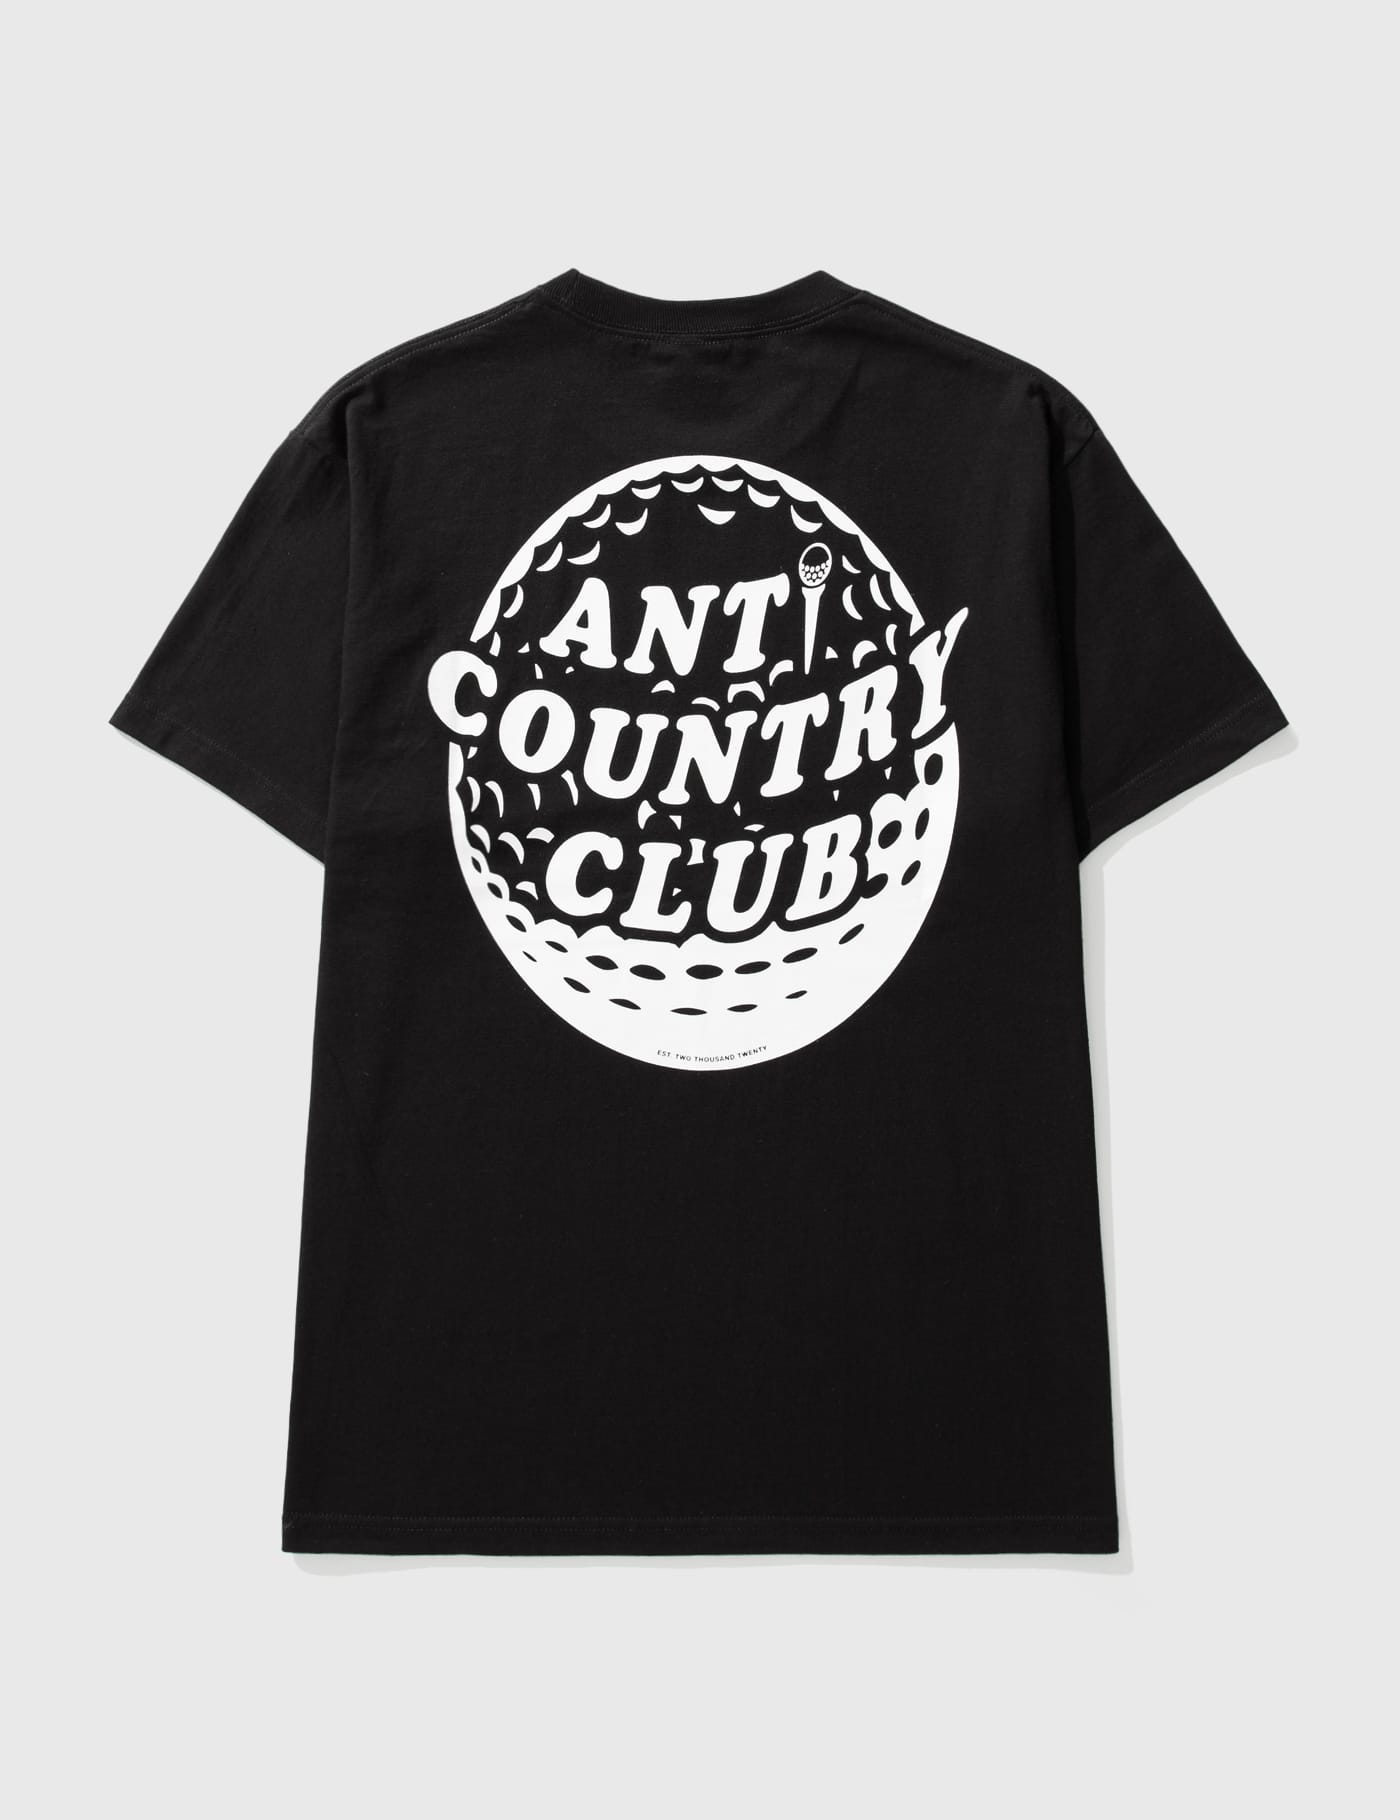 ANTI COUNTRY CLUB | HBX - ハイプビースト(Hypebeast)が厳選した 